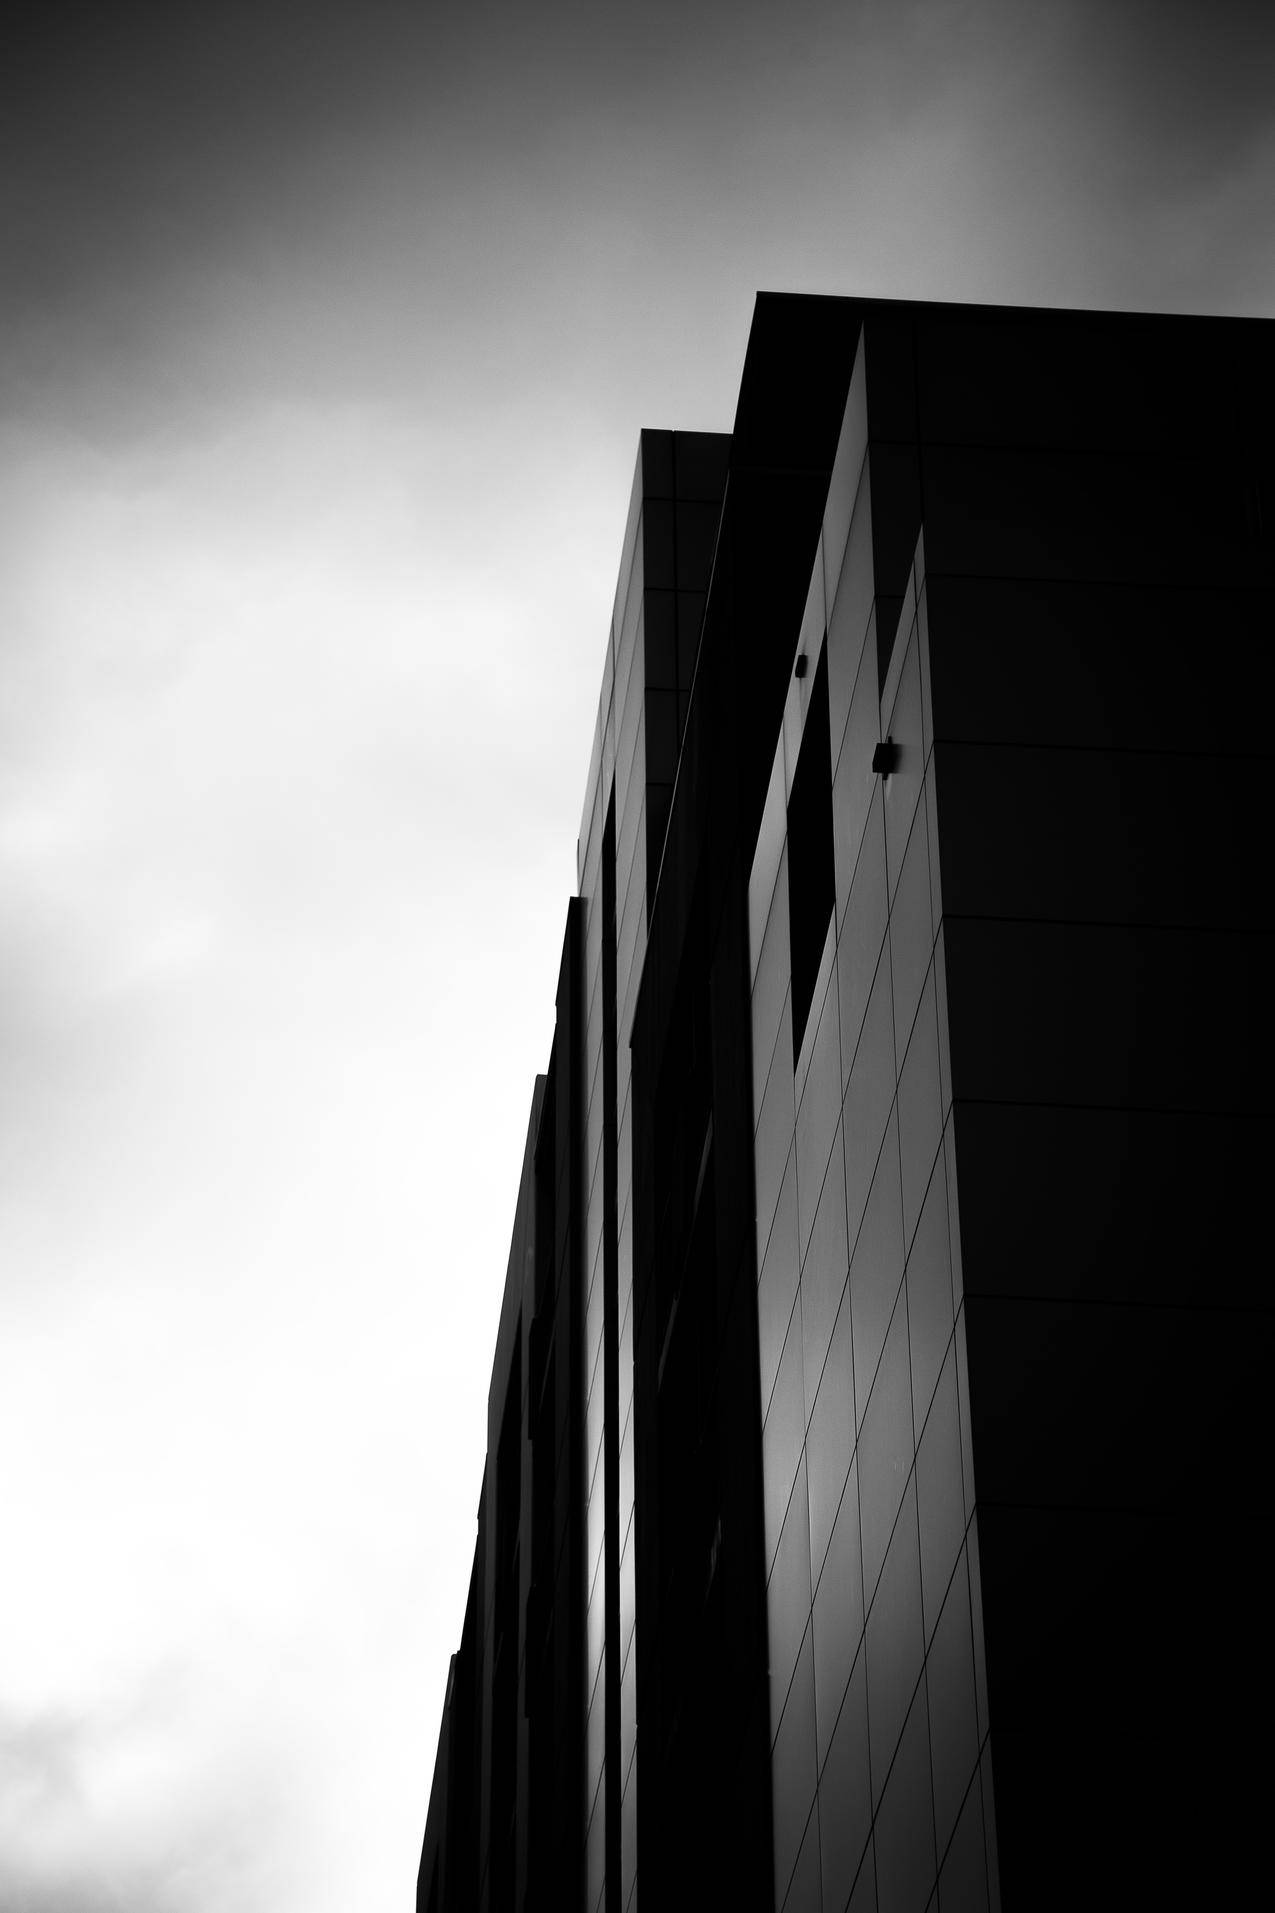 cc0可商用的黑白照片,天空,黑暗,建筑